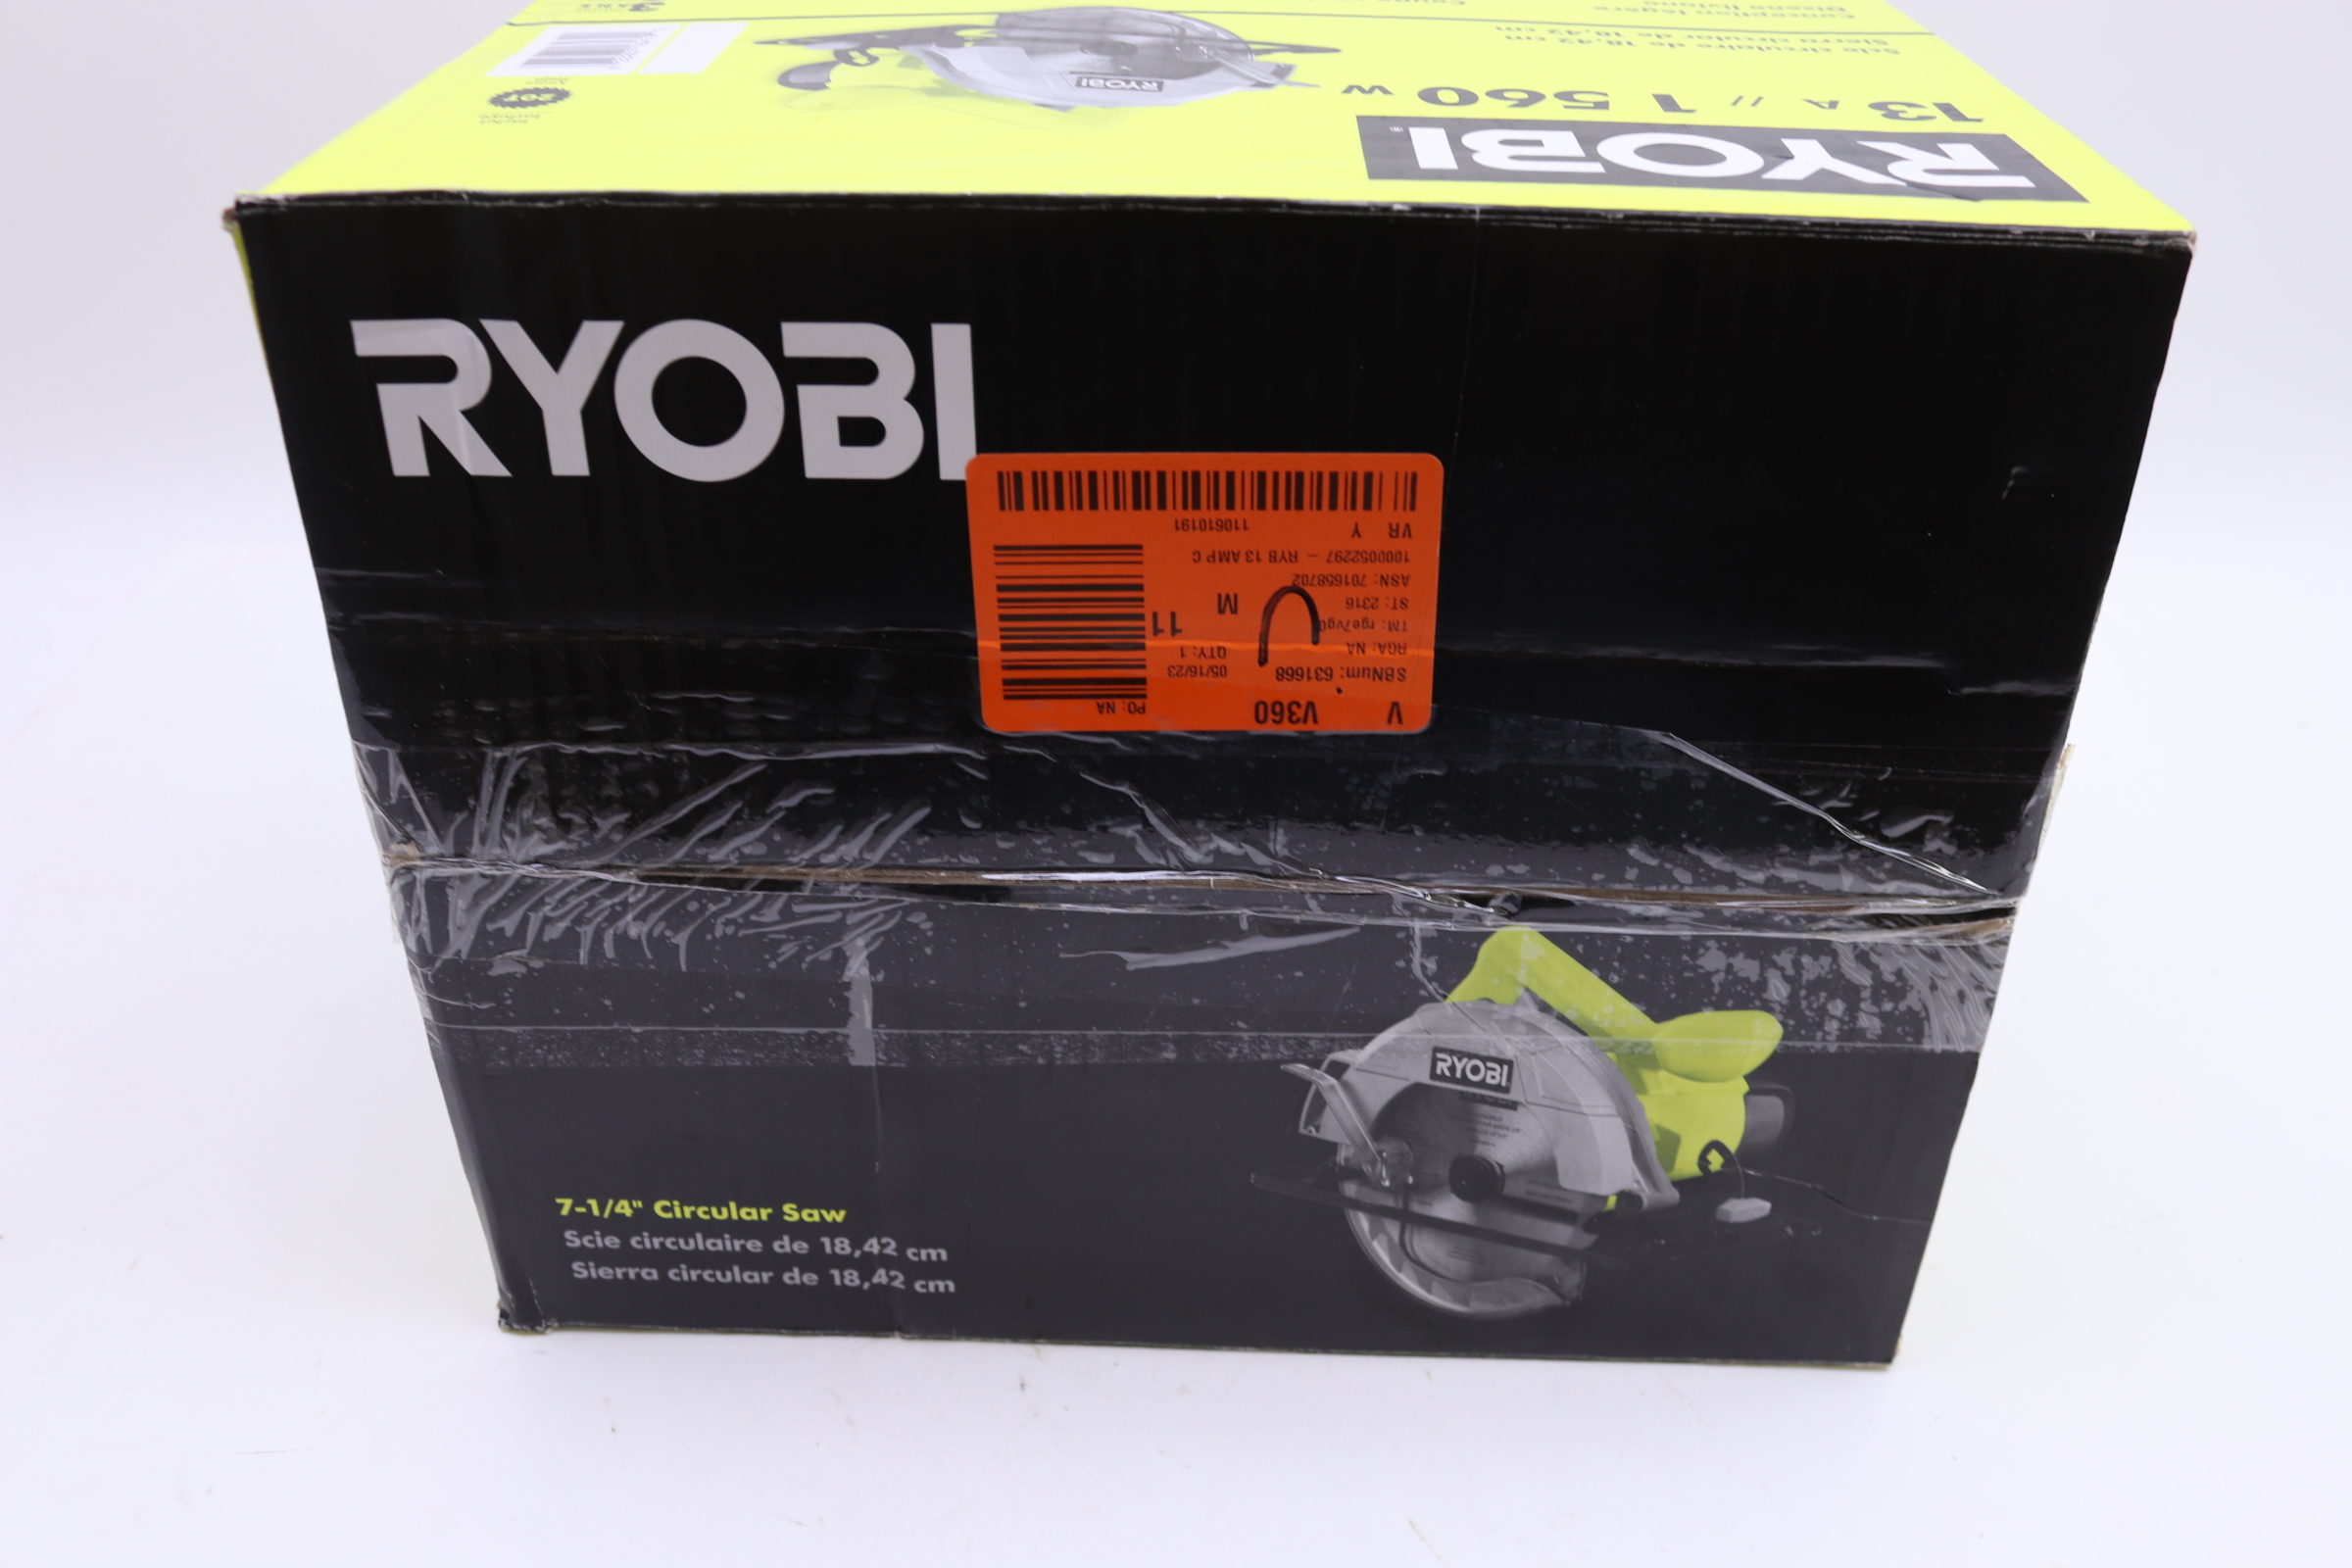 Ryobi CSB125 13 Amp 120V Corded Electric 7-1/4